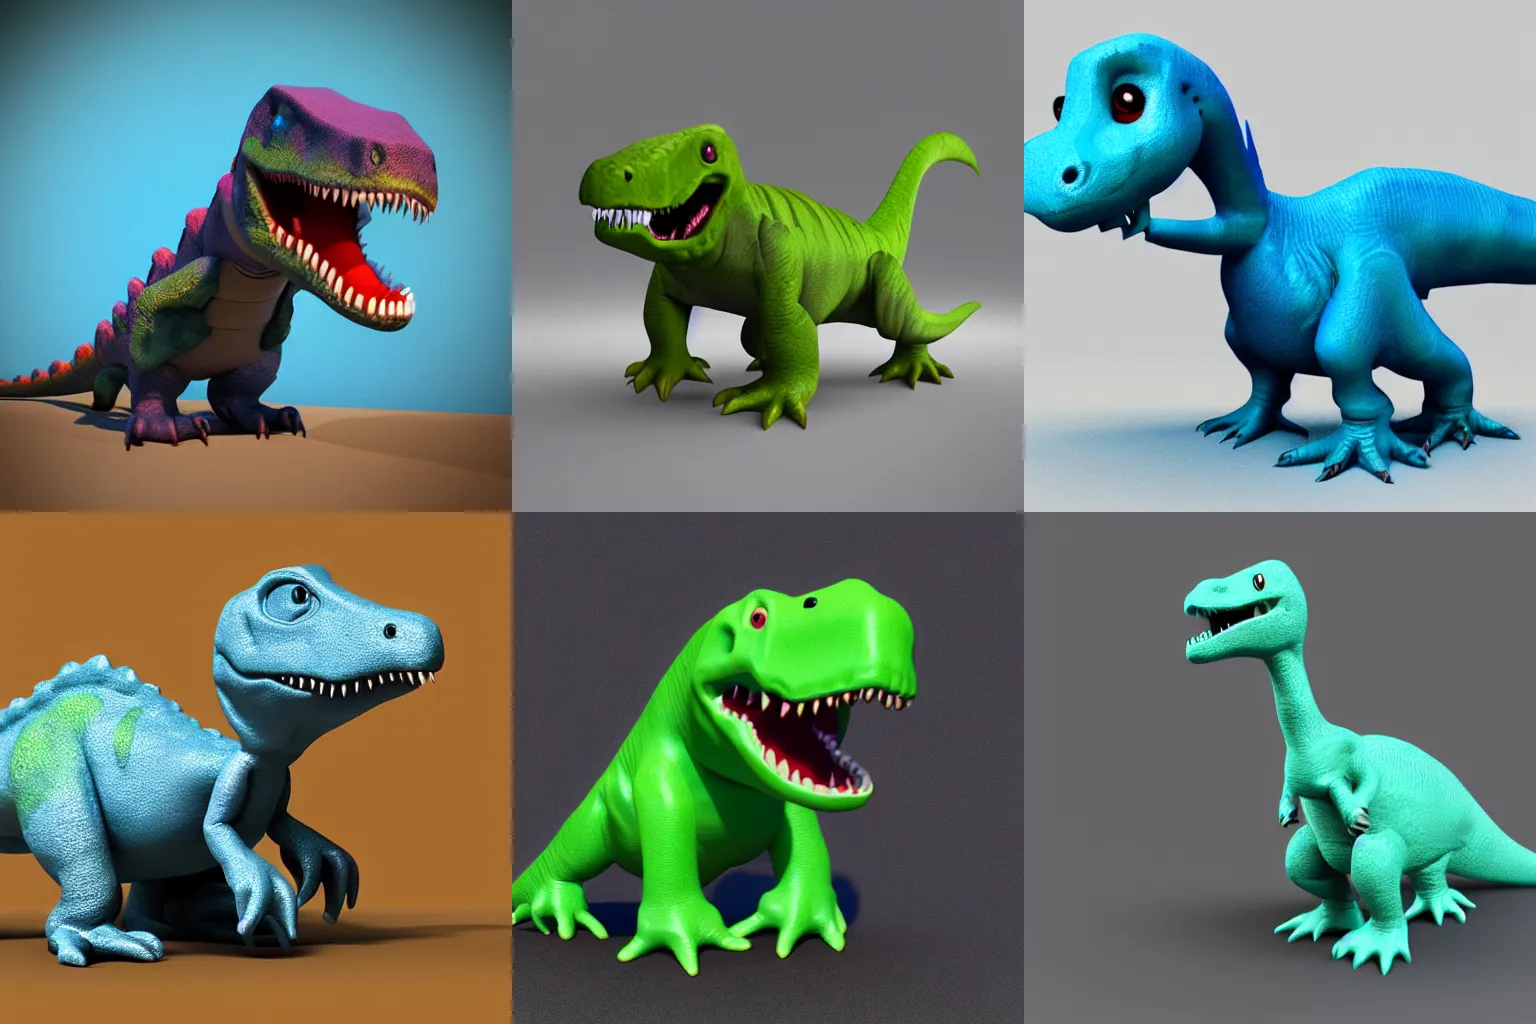 Prompt: cute claymation dinosaur 3d render